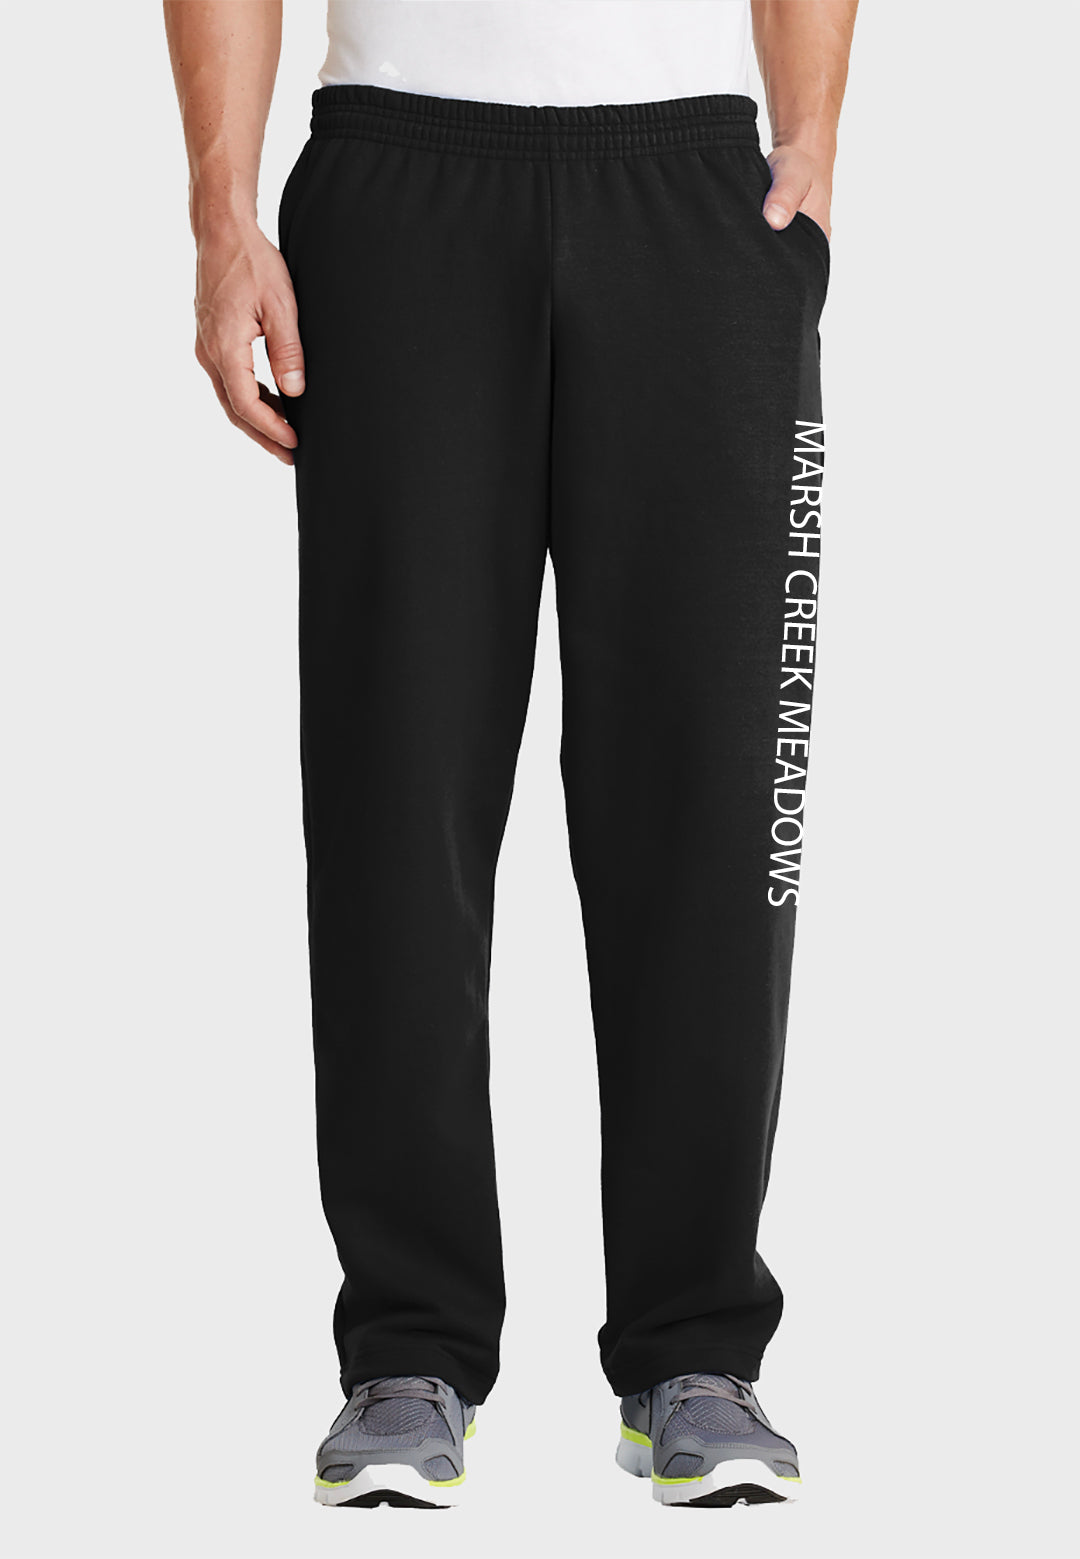 Marsh Creek Meadows Port & Company® Core Black Fleece Sweatpant with Pockets (Unisex)